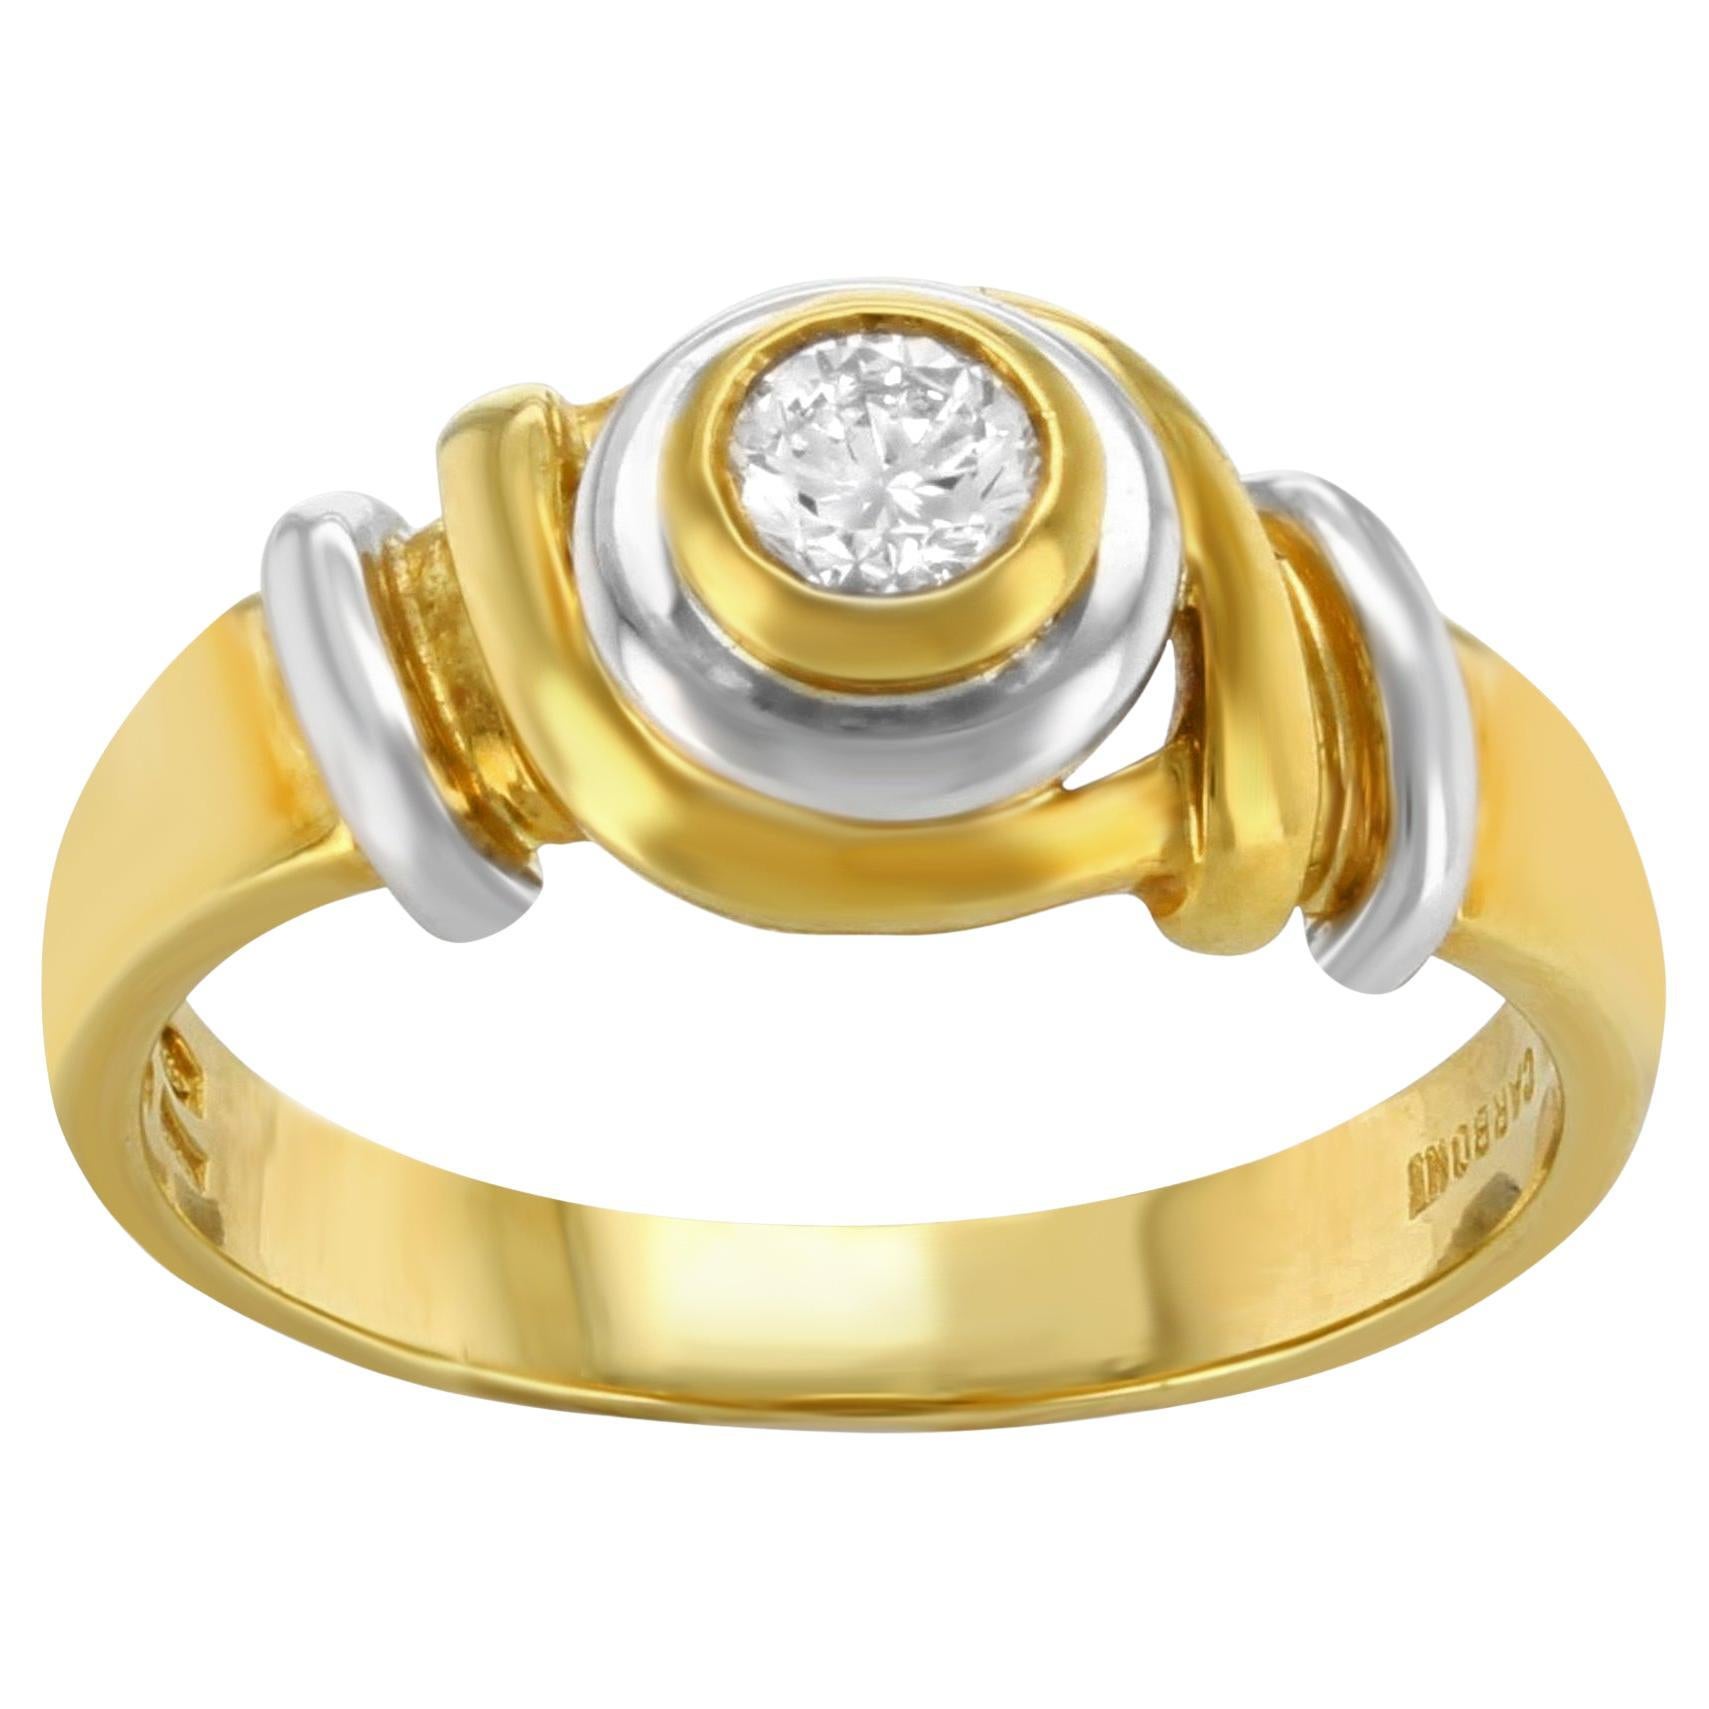 Rachel Koen Diamond Ladies Ring 18K Yellow White Gold 0.20 Cttw For Sale